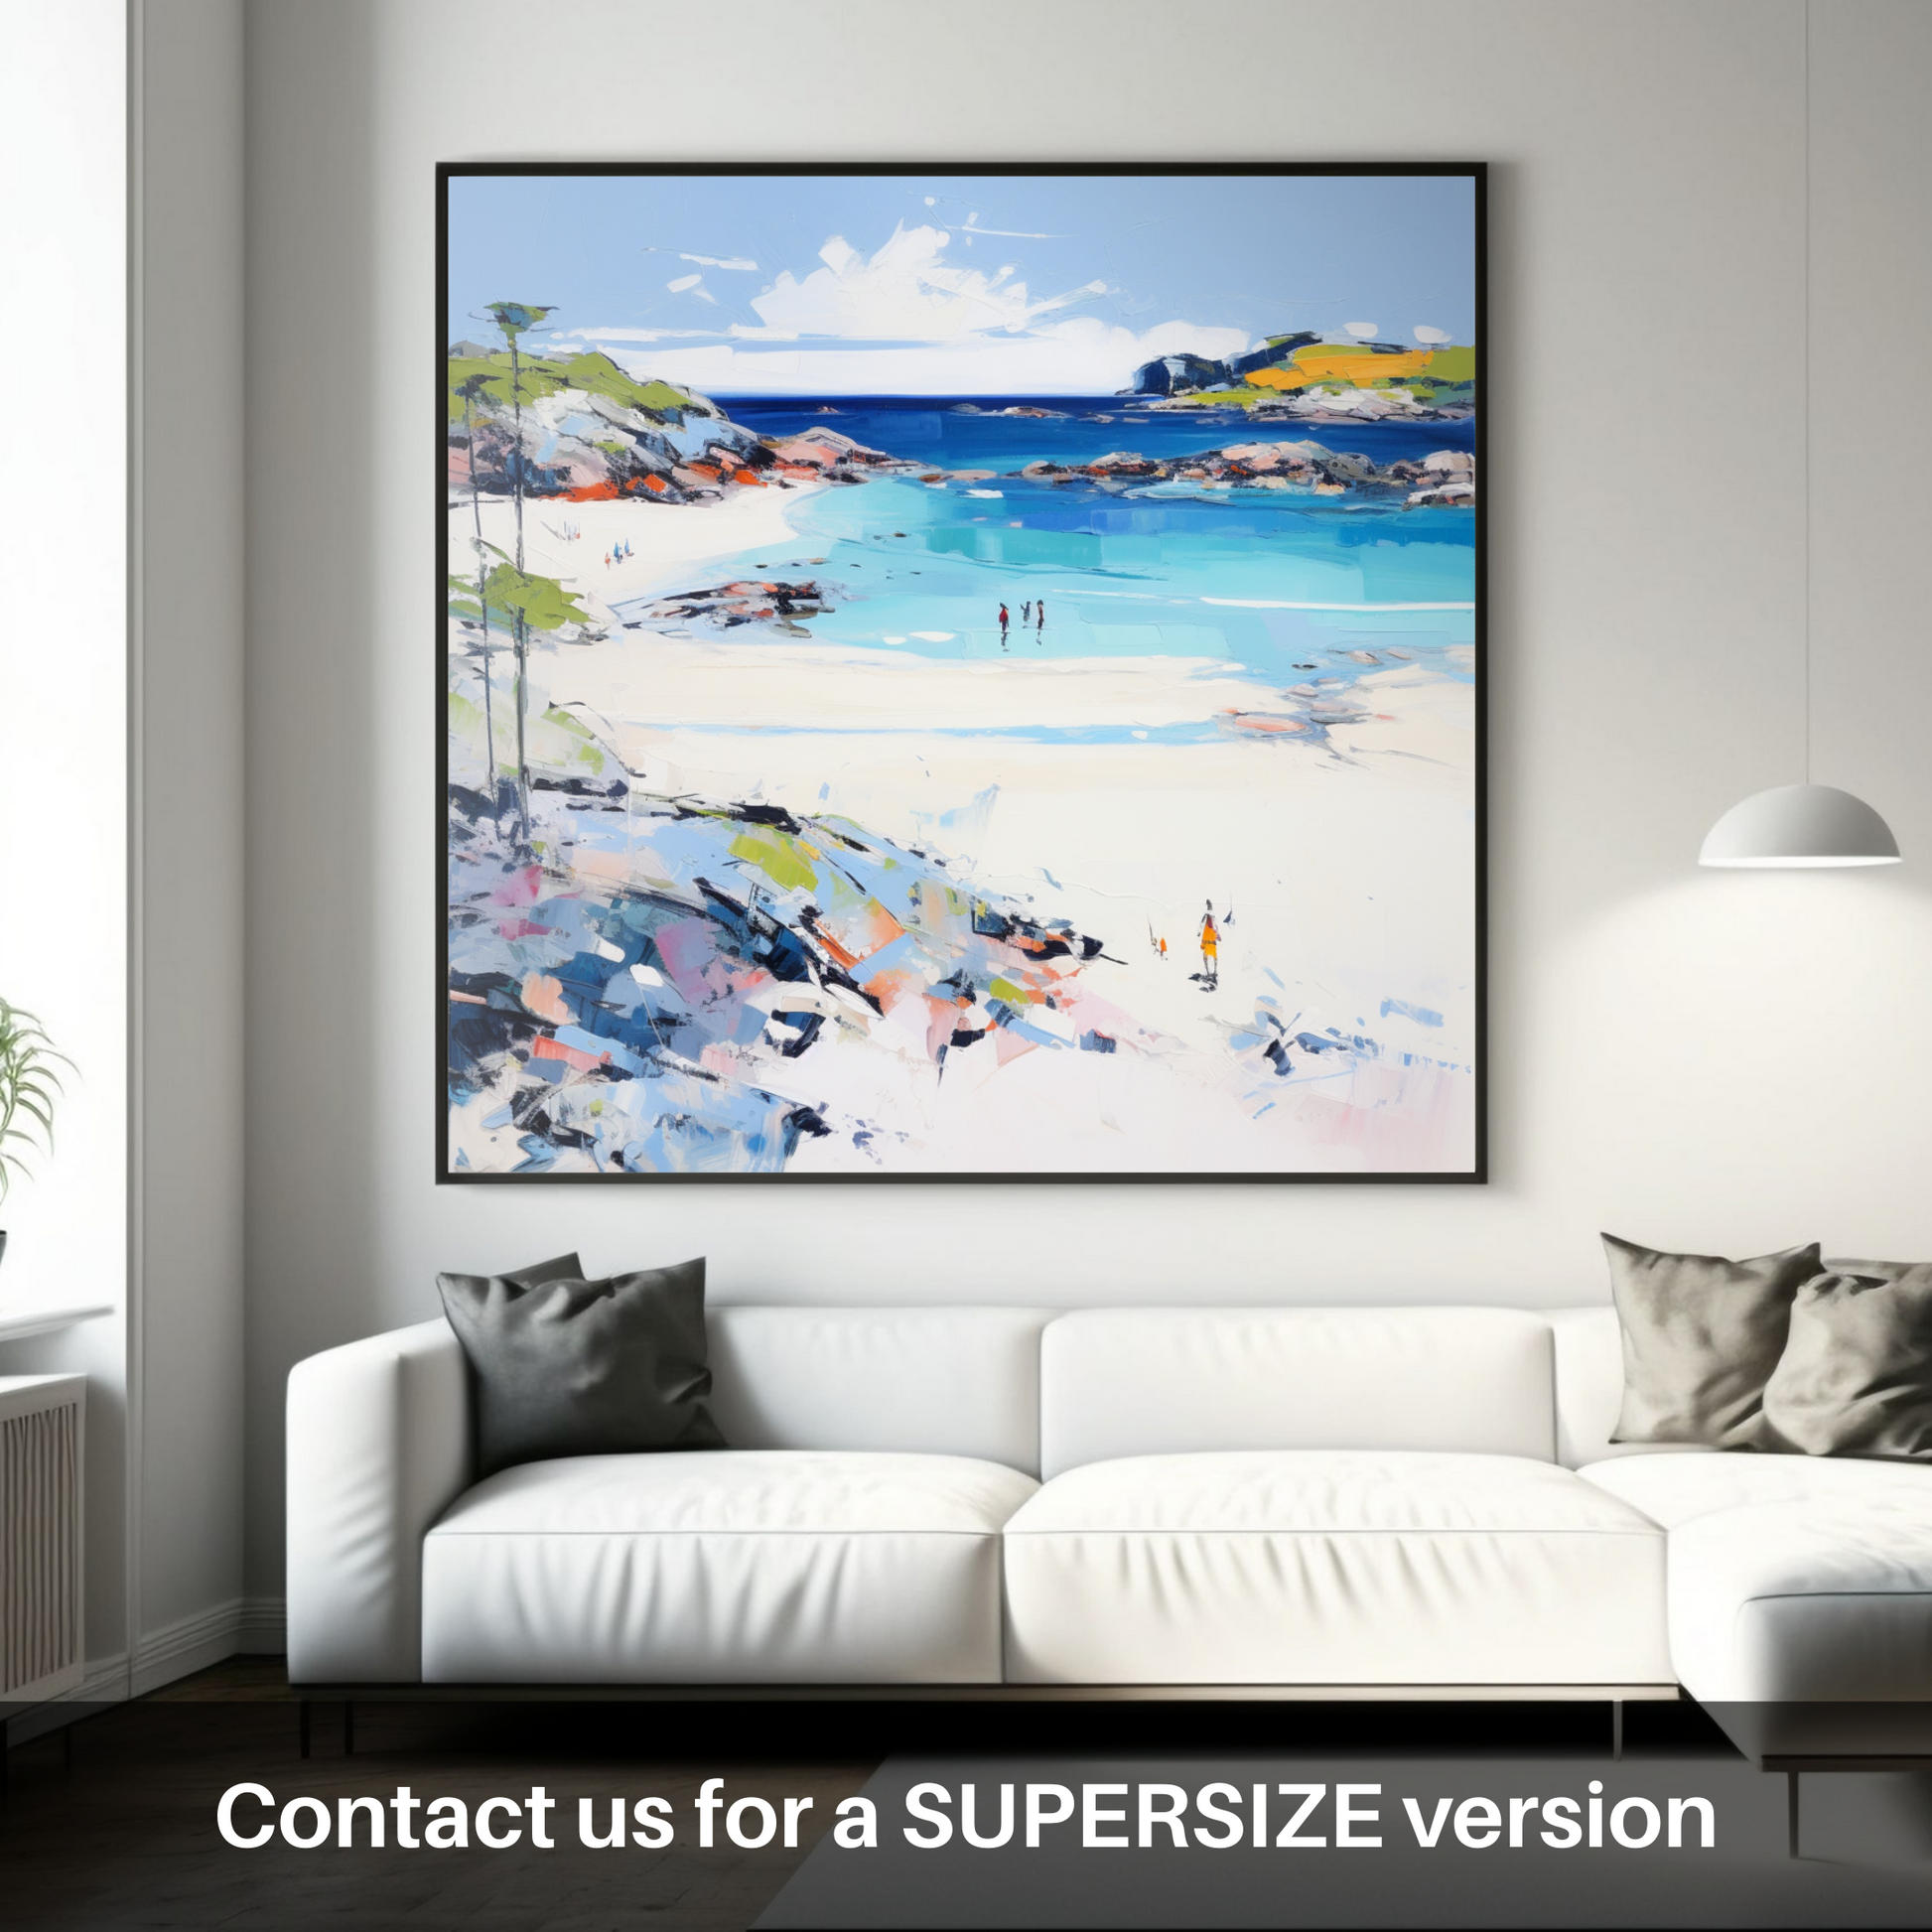 Huge supersize print of Arisaig Beach, Arisaig in summer